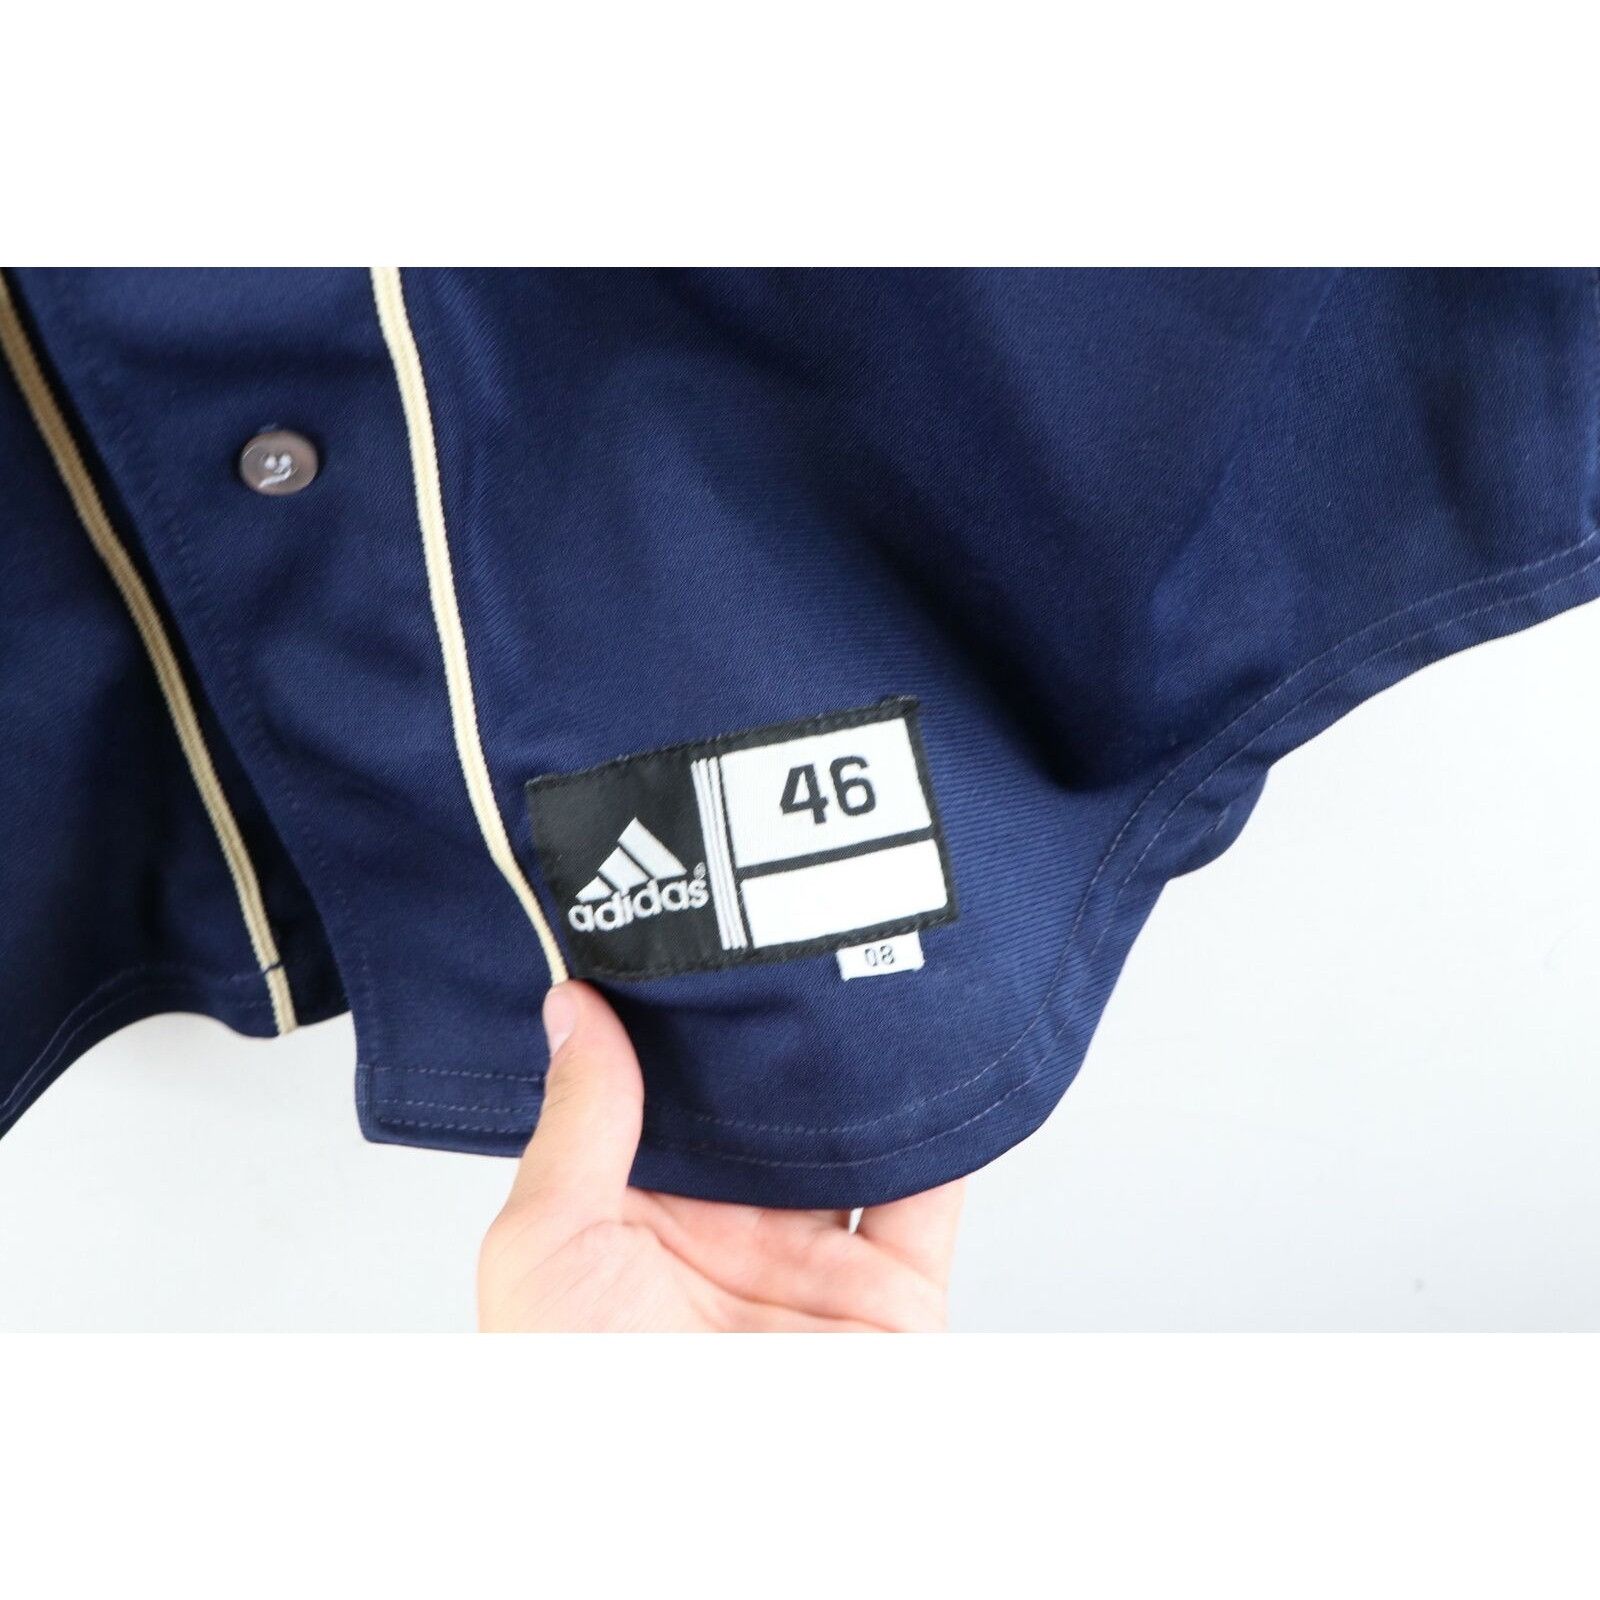 Adidas Adidas University of Pittsburgh Game Worn Baseball Jersey Size US S / EU 44-46 / 1 - 4 Thumbnail